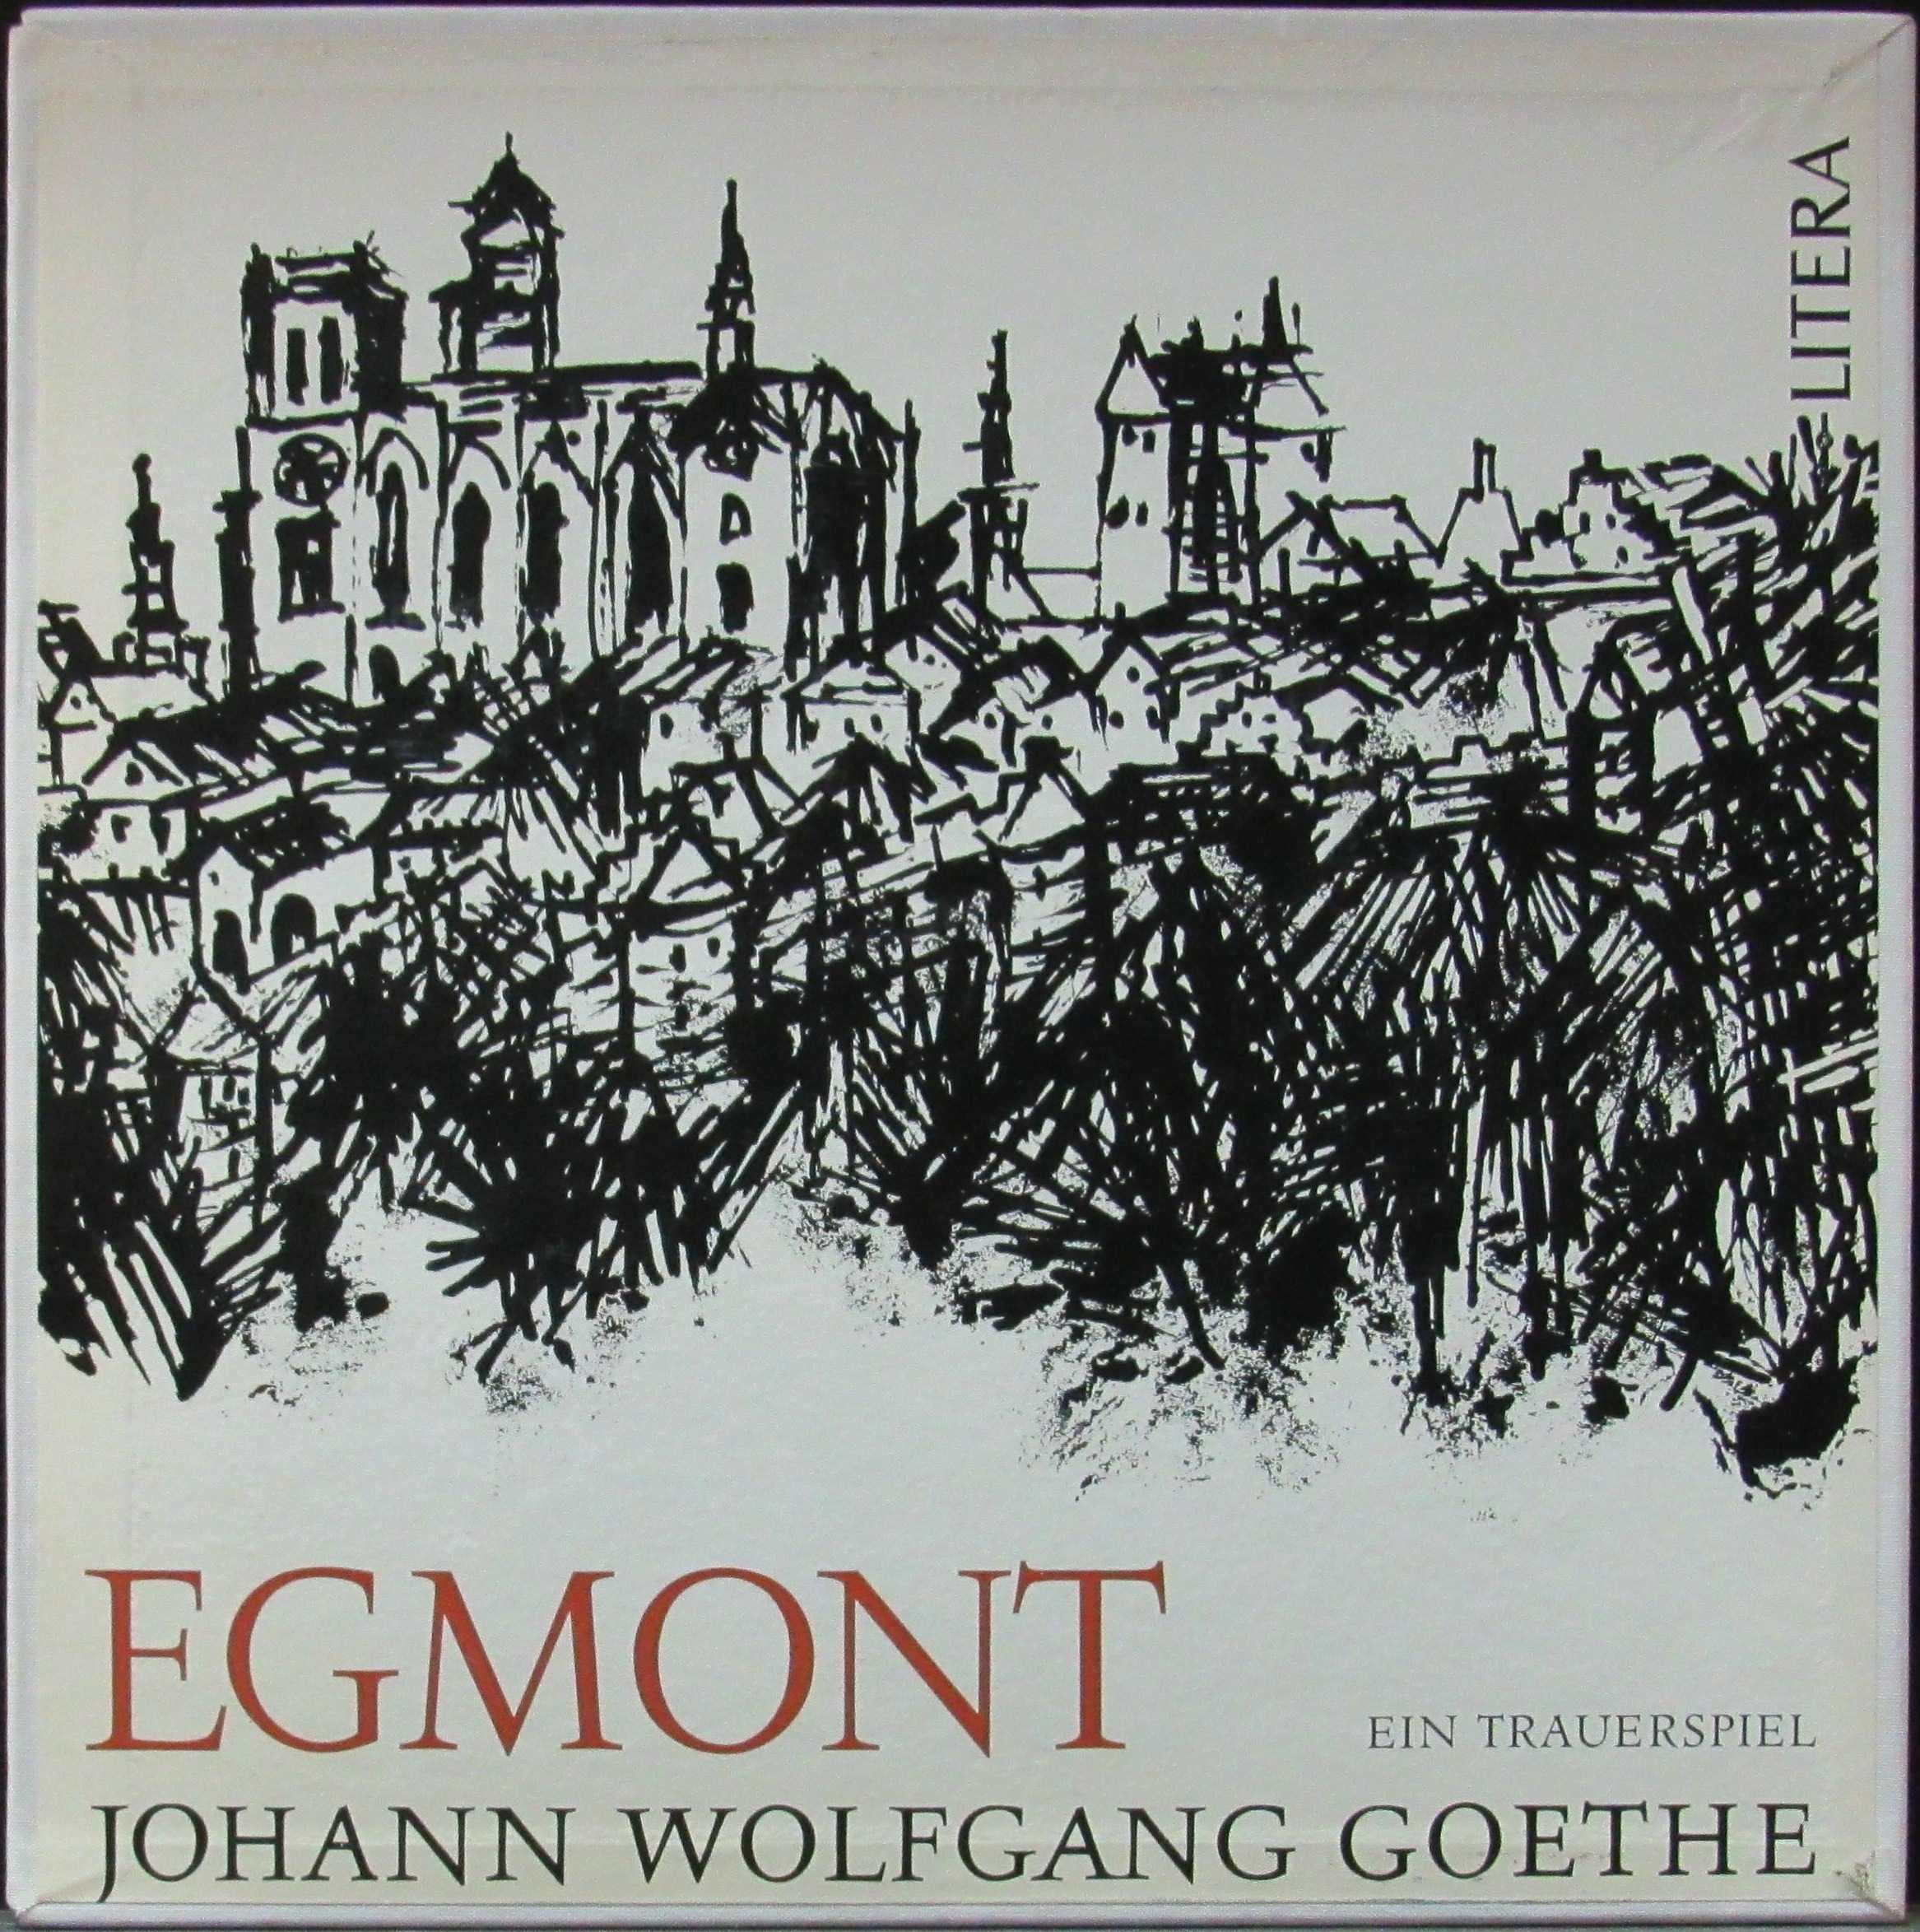 Кто написал к трагедии гете эгмонт. Эгмонт Гете. Эгмонт Иоганн Вольфганг фон гёте книга. Картинка Эгмонт гёте. Эгмонт Гете иллюстрации.